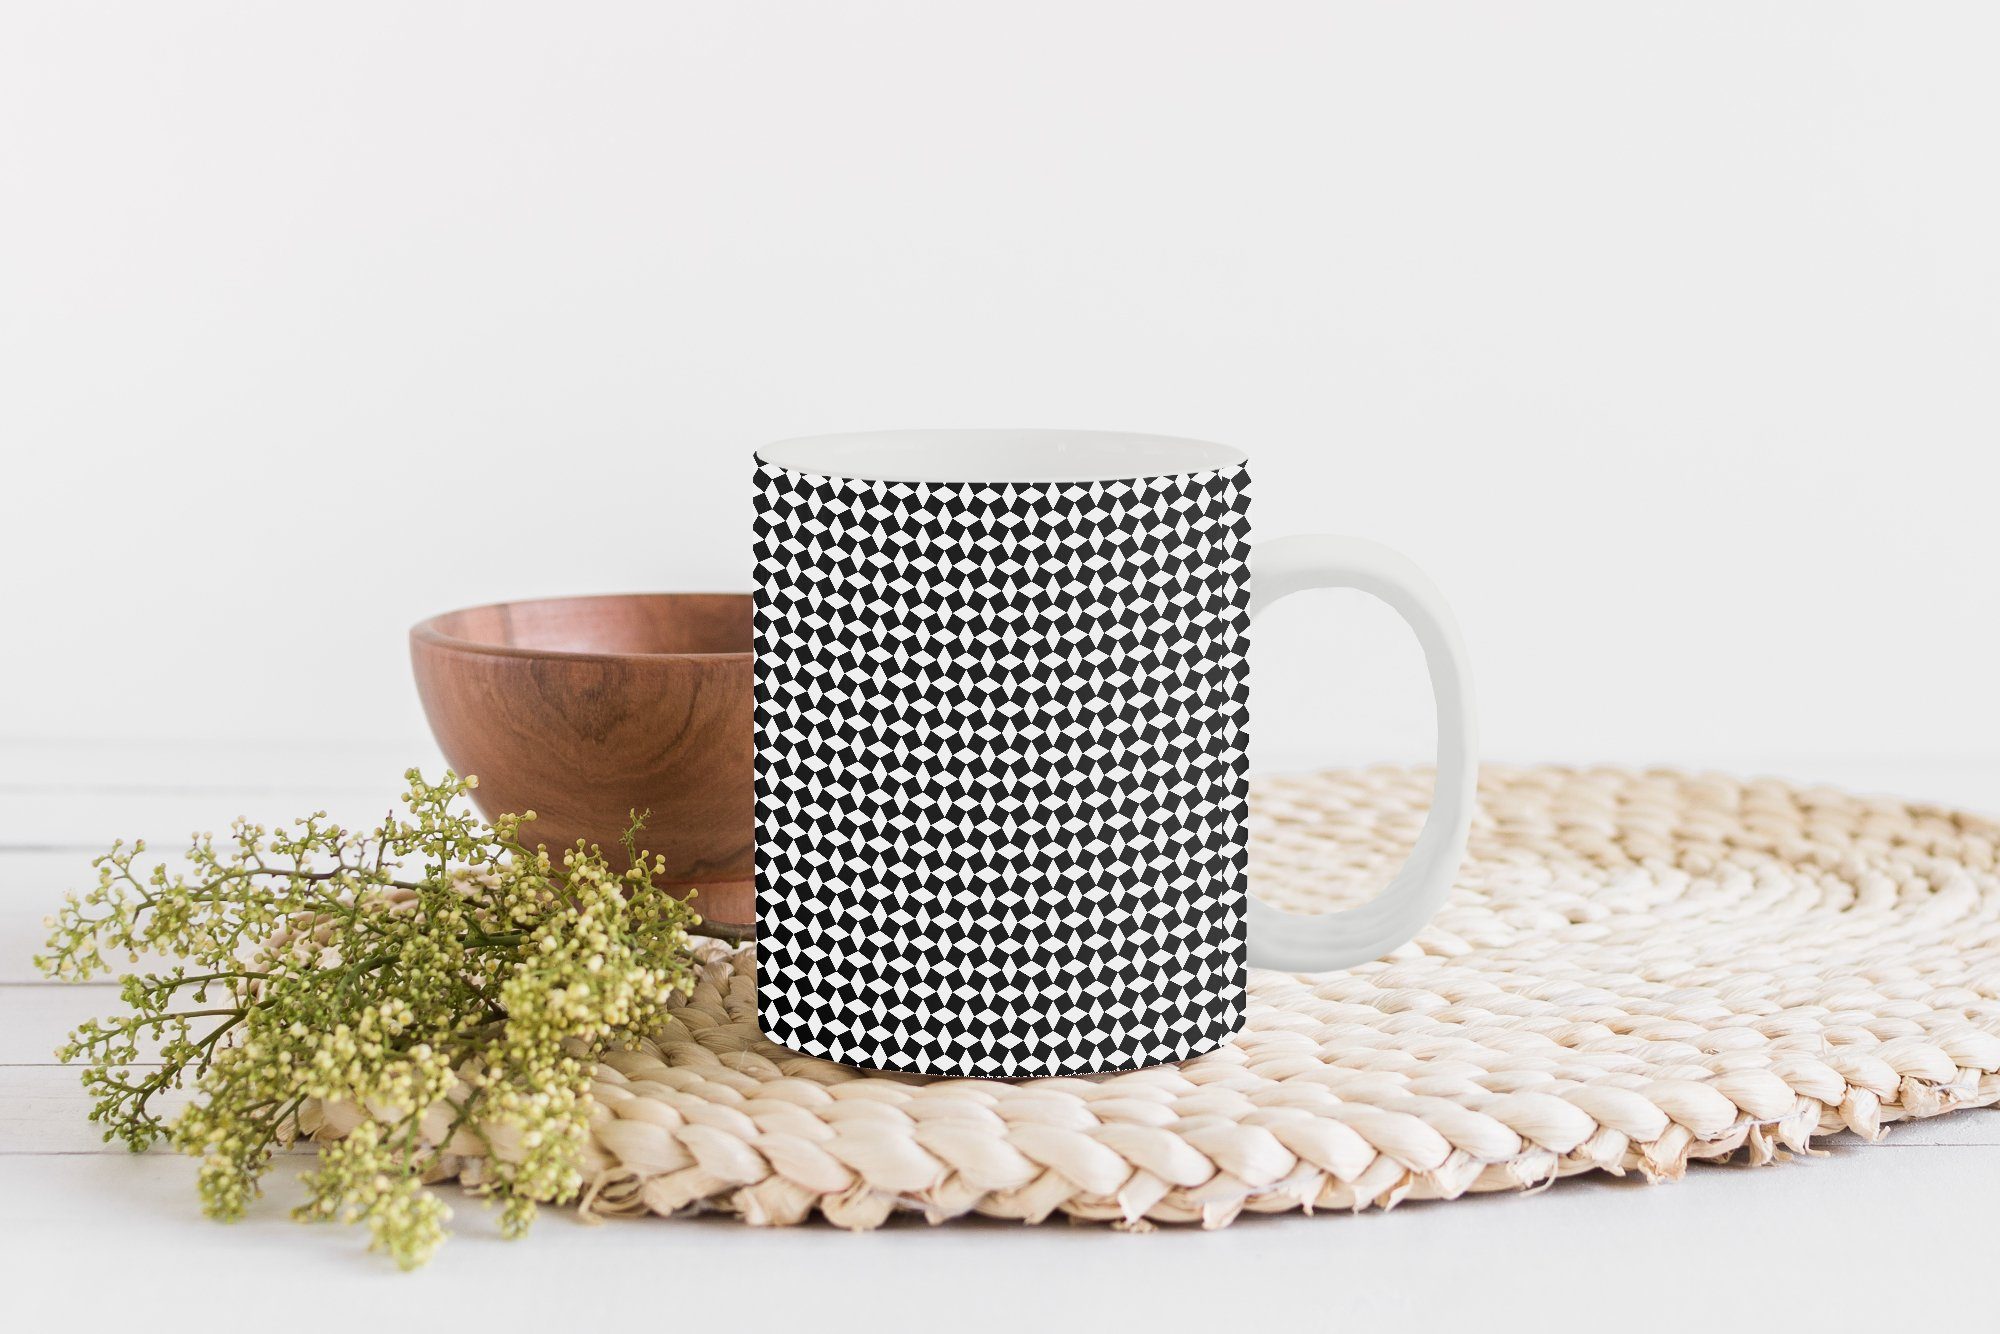 MuchoWow Tasse Gestaltung Teetasse, - Kaffeetassen, - Muster, Geschenk Teetasse, Becher, Geometrie Keramik